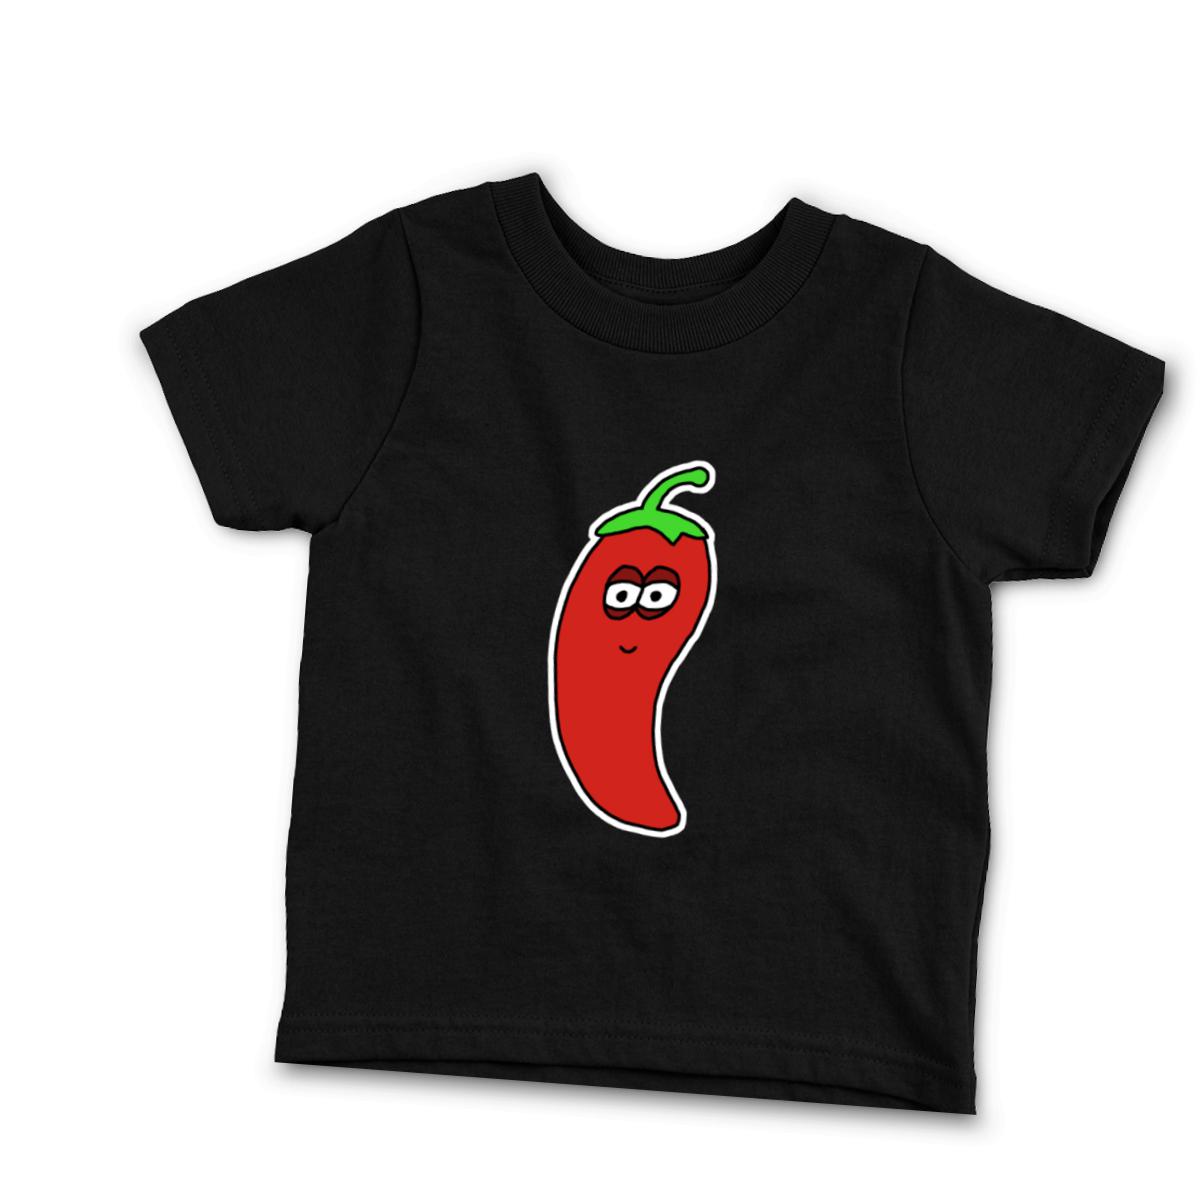 Chili Pepper Toddler Tee 2T black